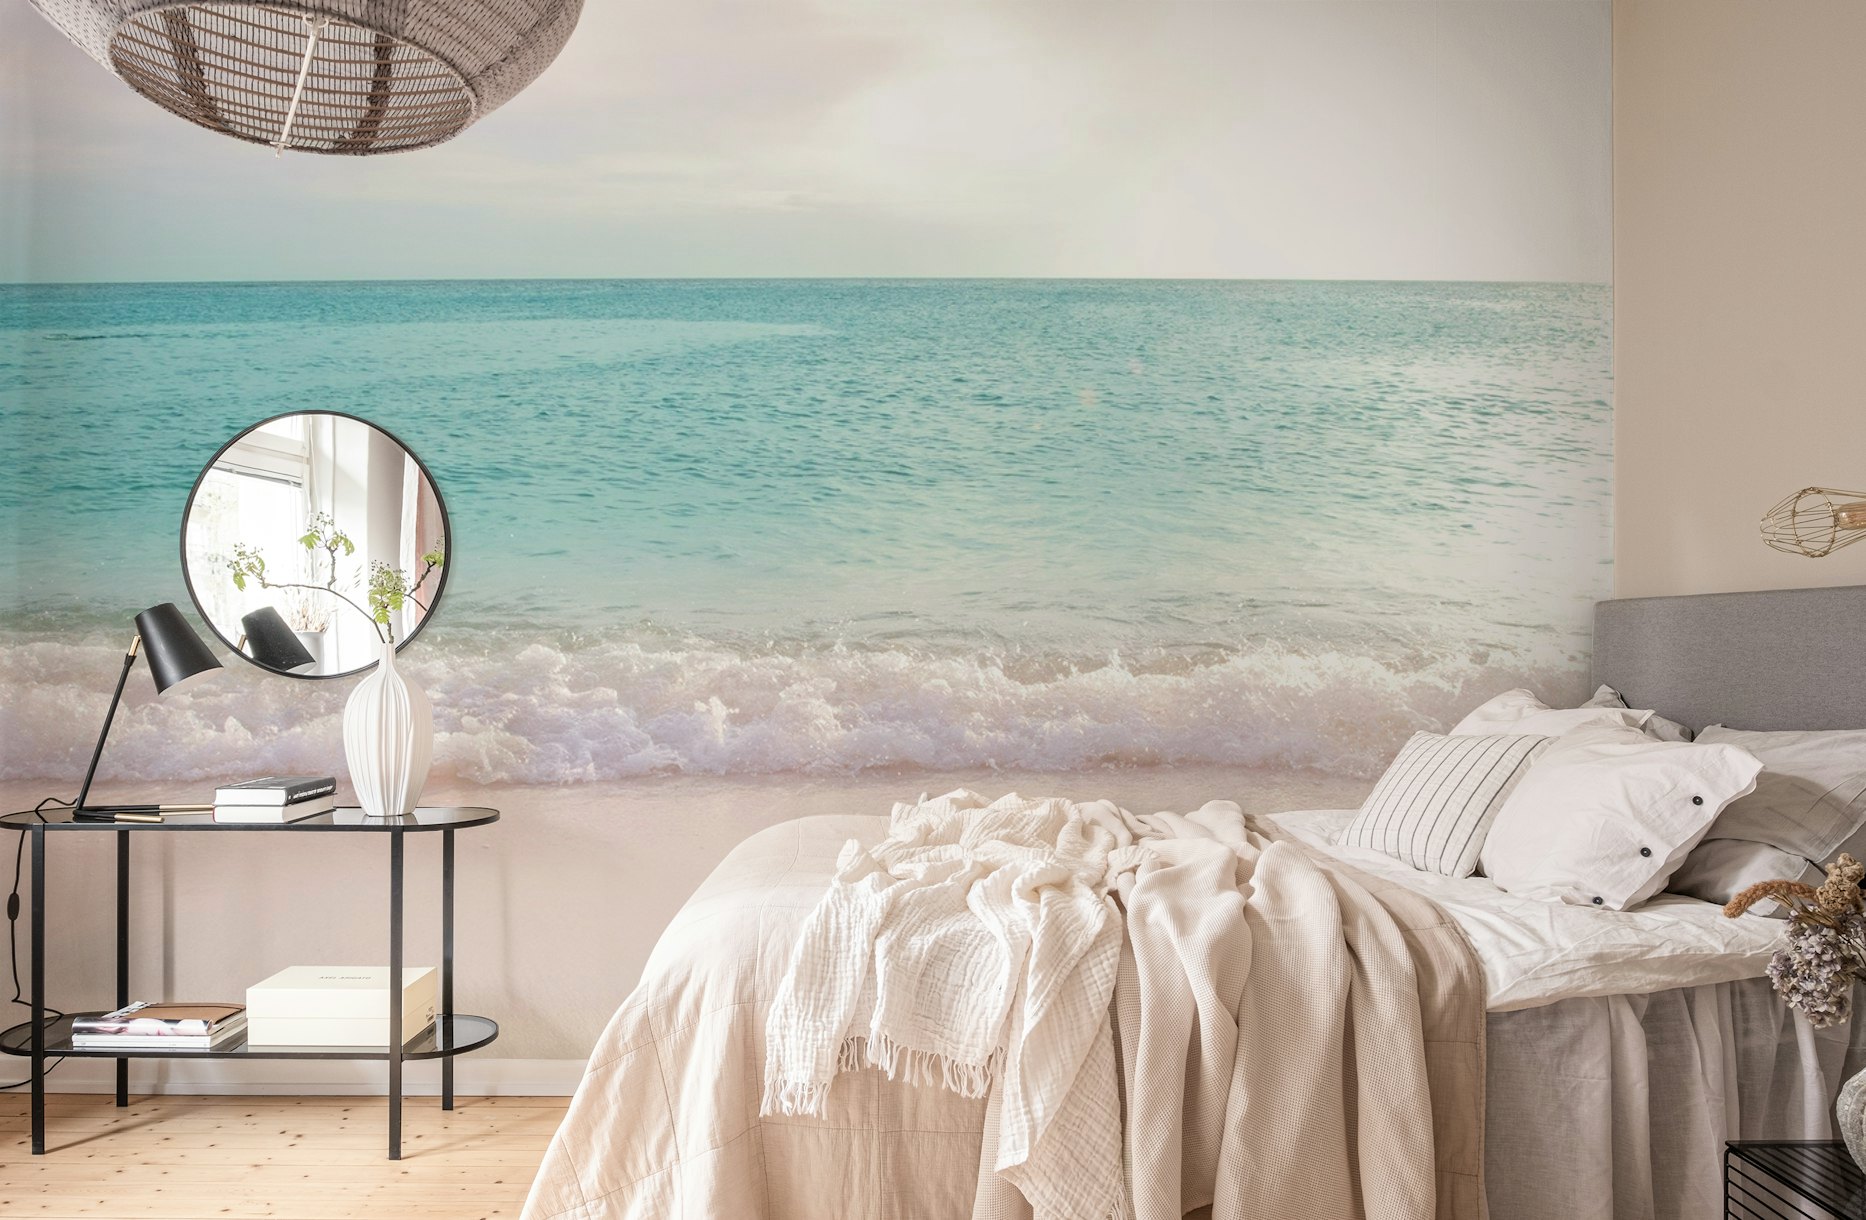 Soft Pastel Ocean Waves 1 wallpaper